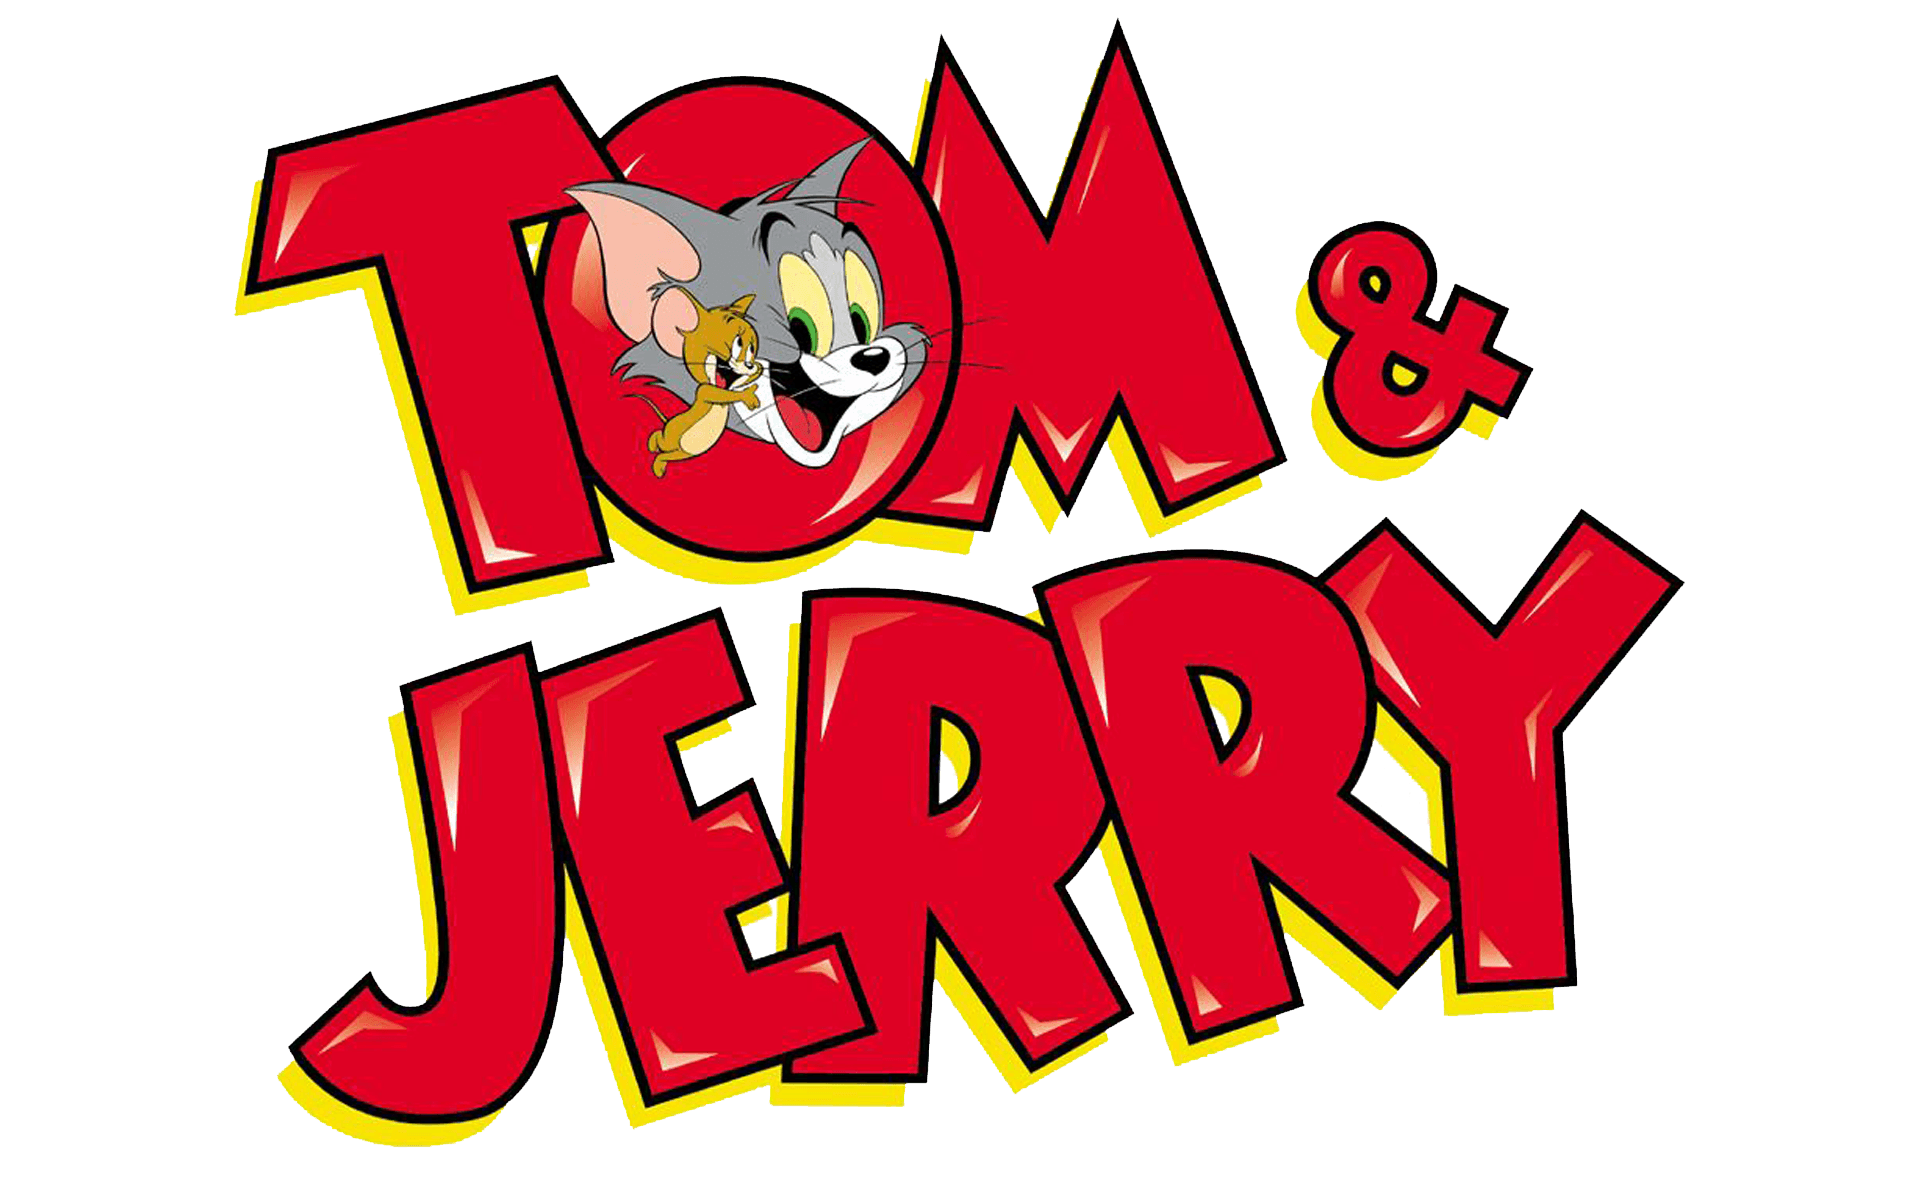 Tom and Jerry Logo - Tom And Jerry Cartoon Logo PNG Image - PurePNG | Free transparent ...